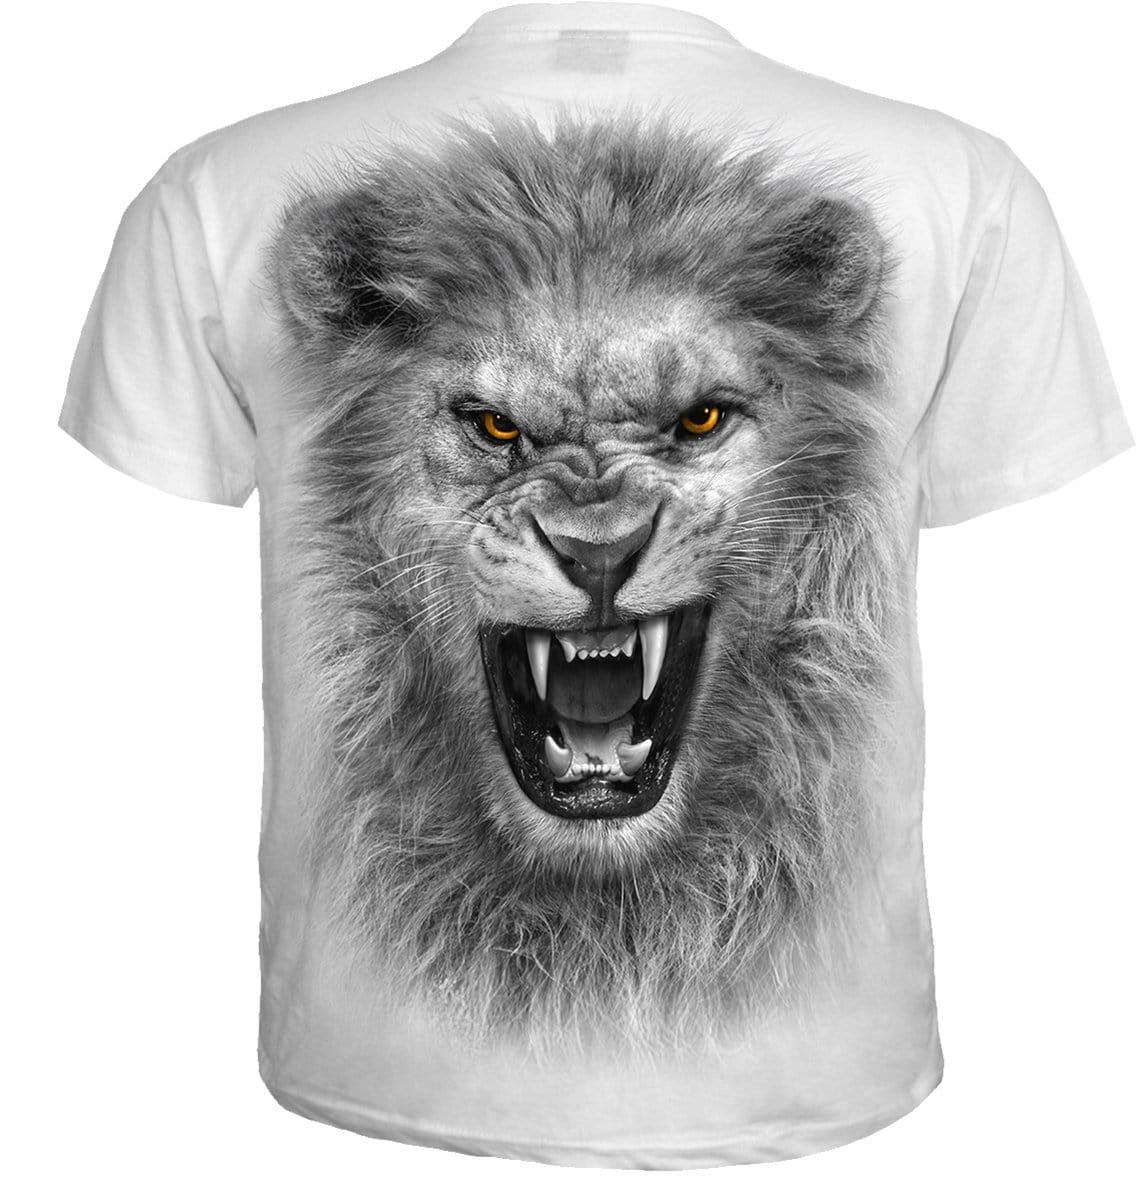 TRIBAL LION - T-Shirt White - Spiral USA